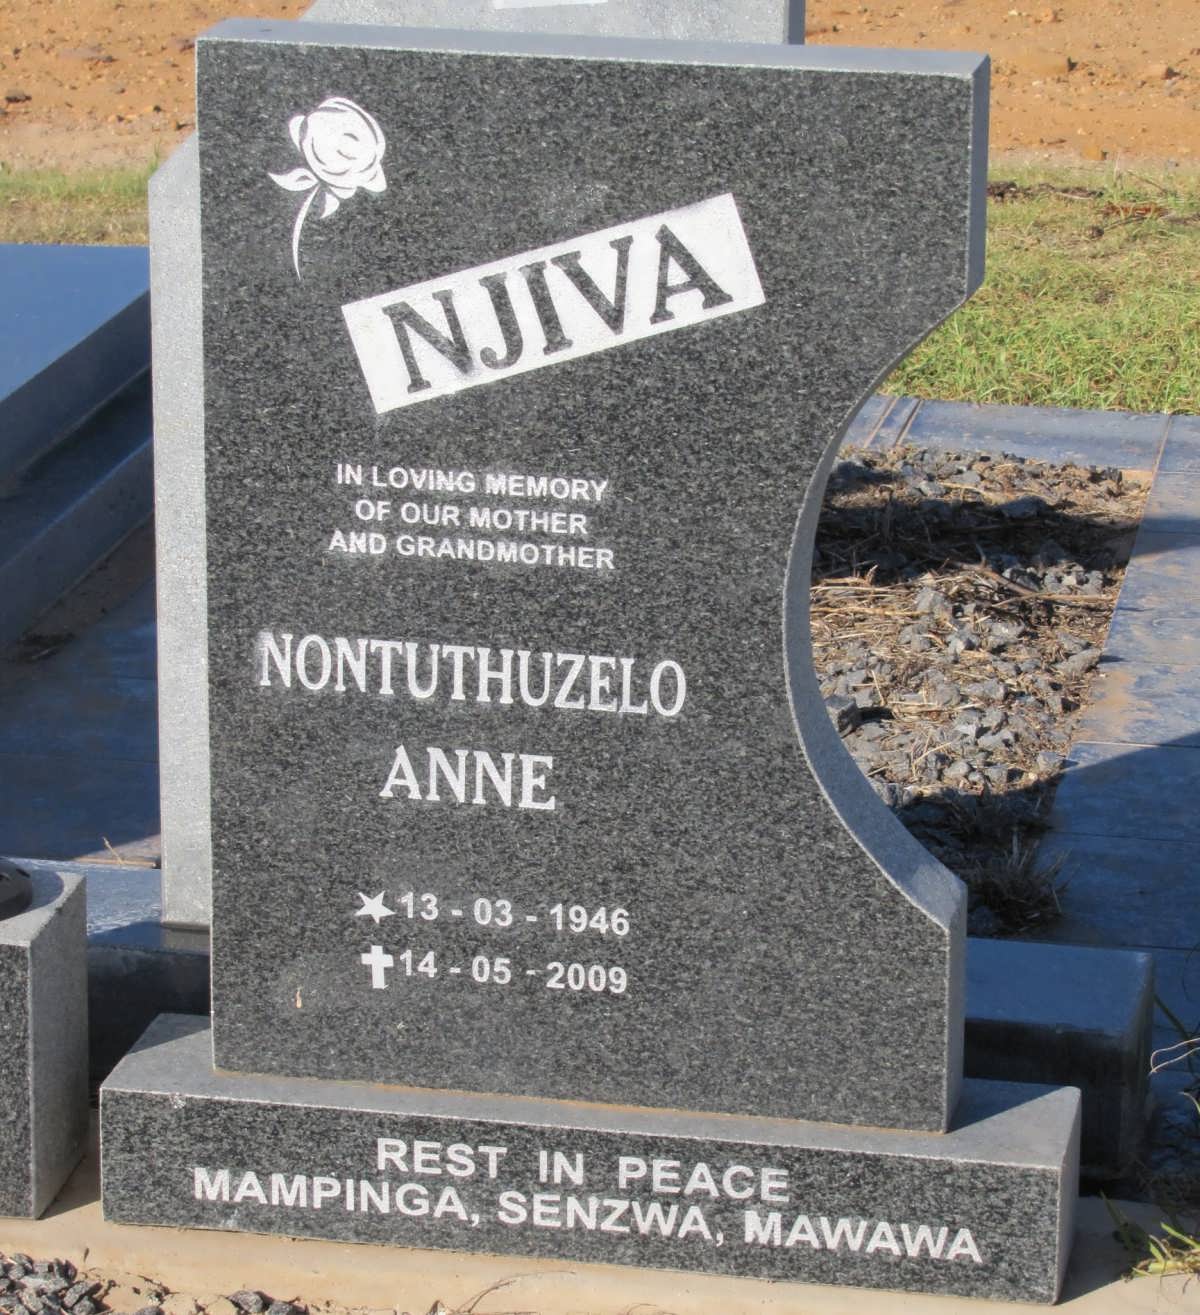 NJIVA Nontuthuzelo Anne 1946-2009